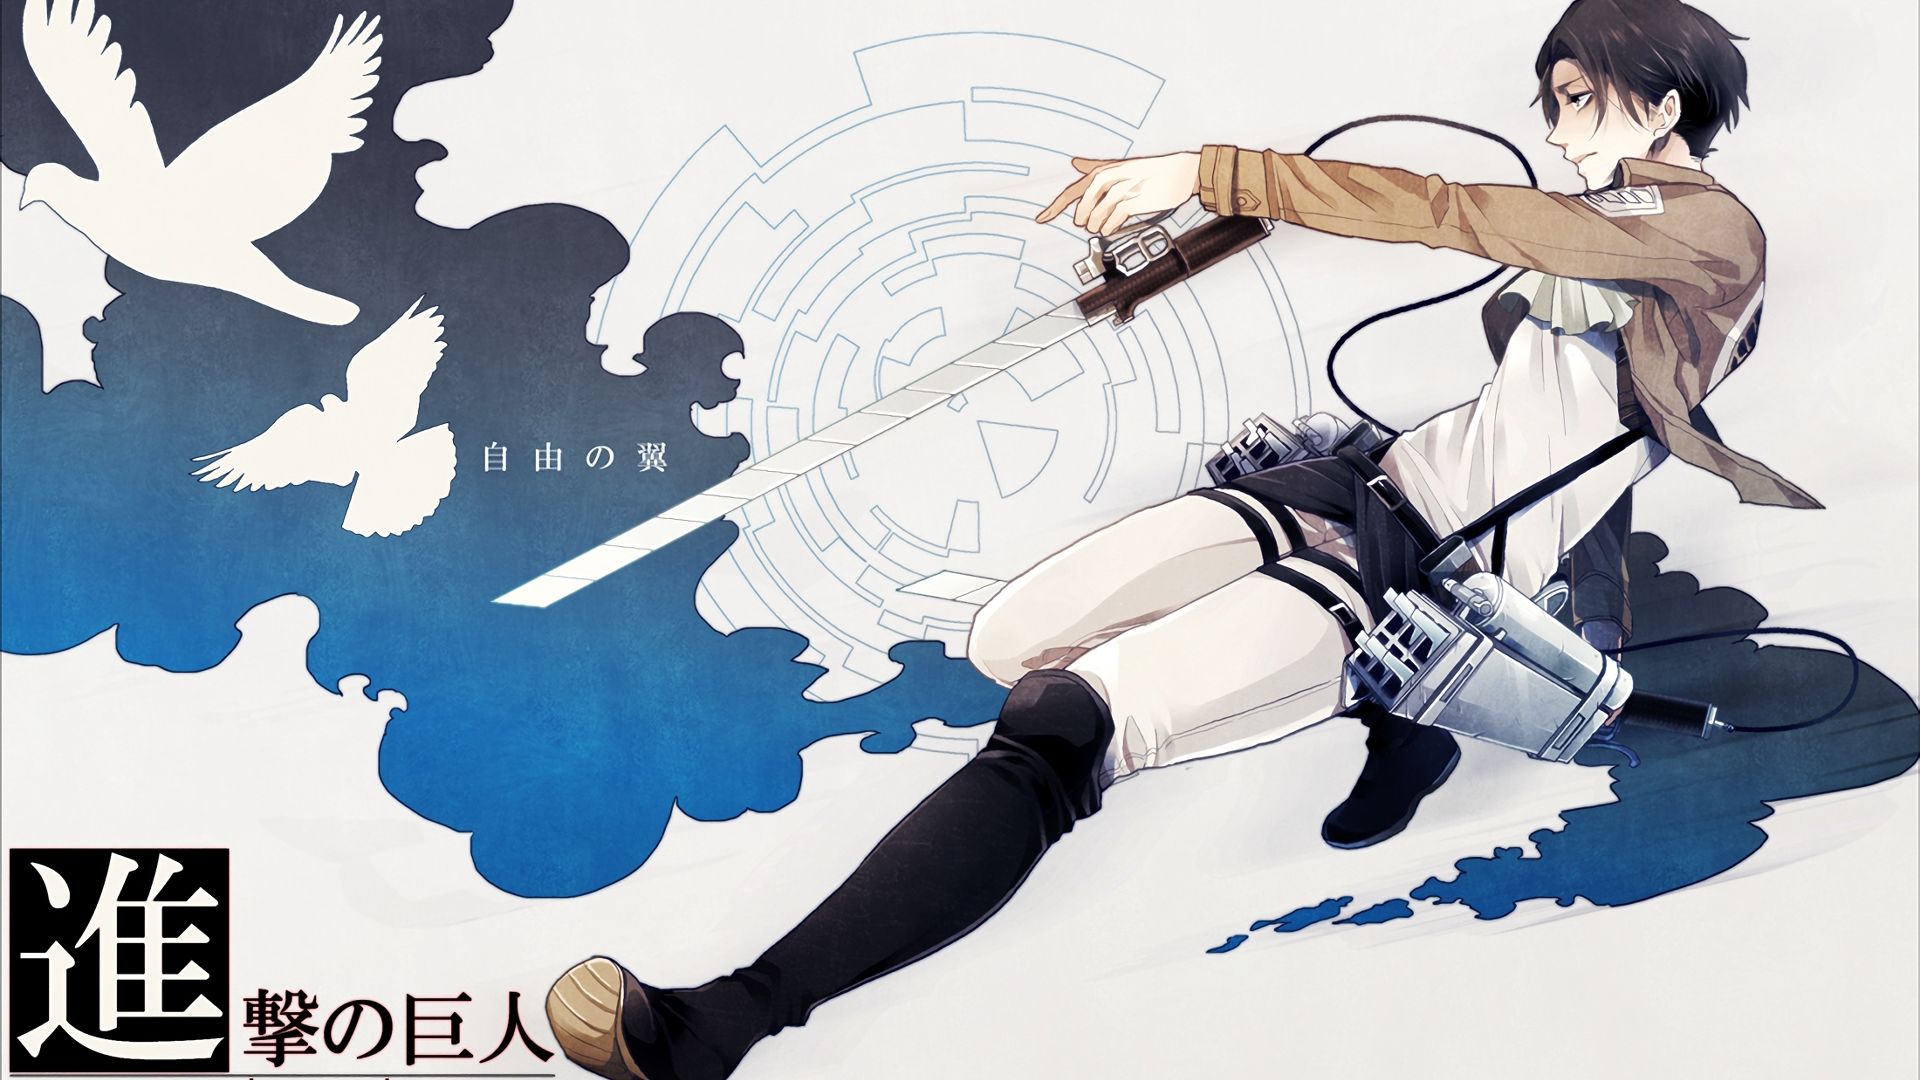 Desktop Wallpaper Levi Ackerman Attack On Titan Anime Hd Image Picture Background Kgw Cg